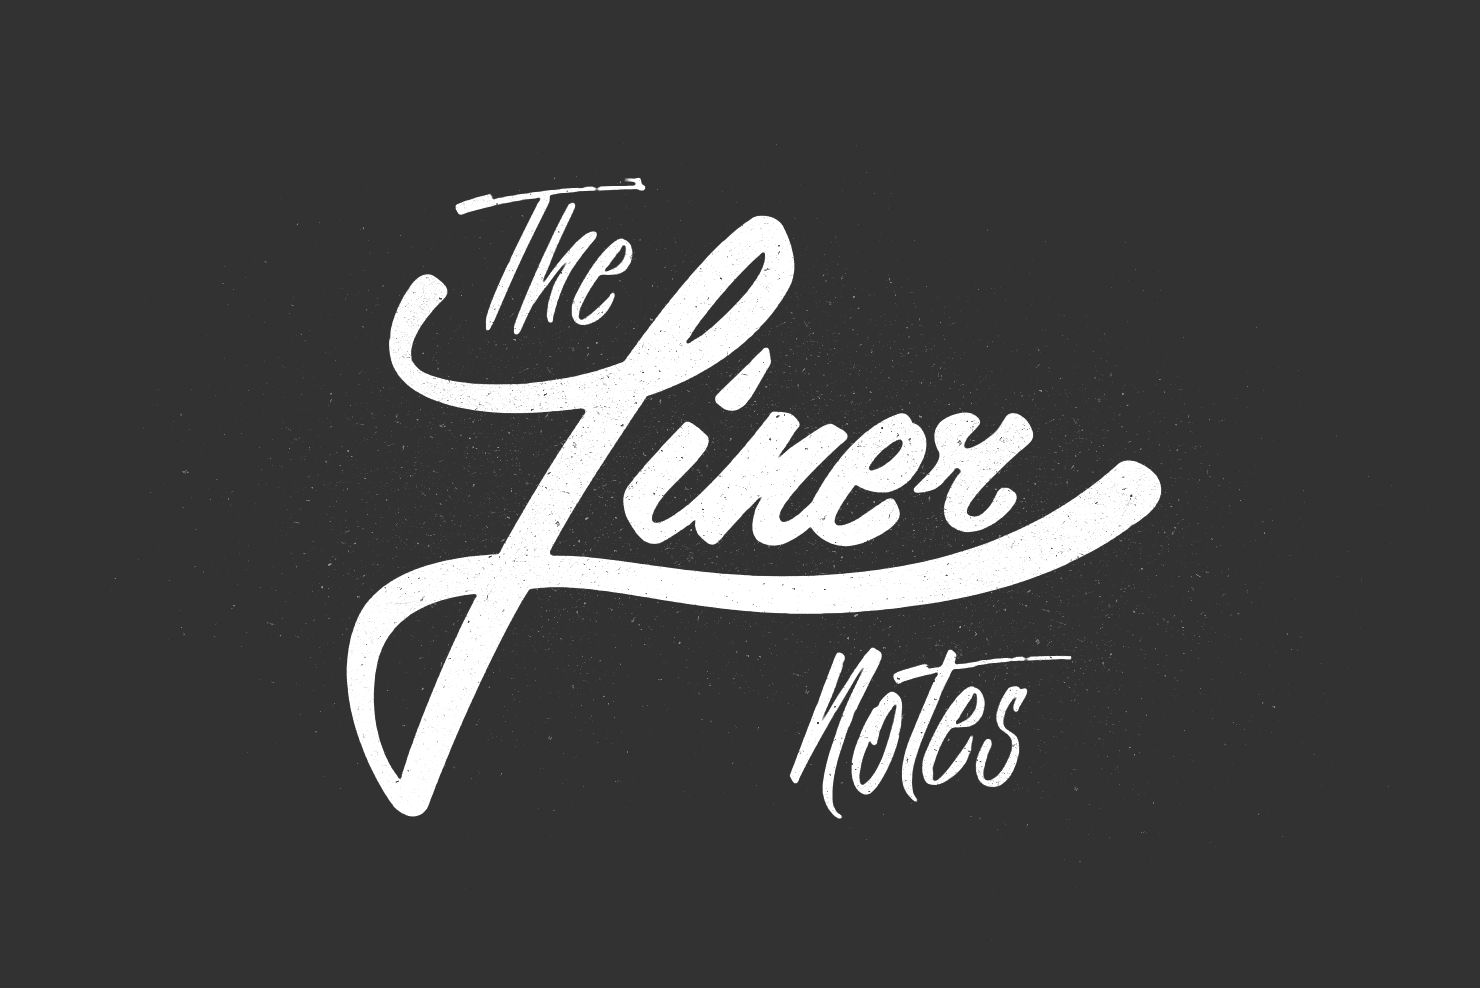 Liner notes logo